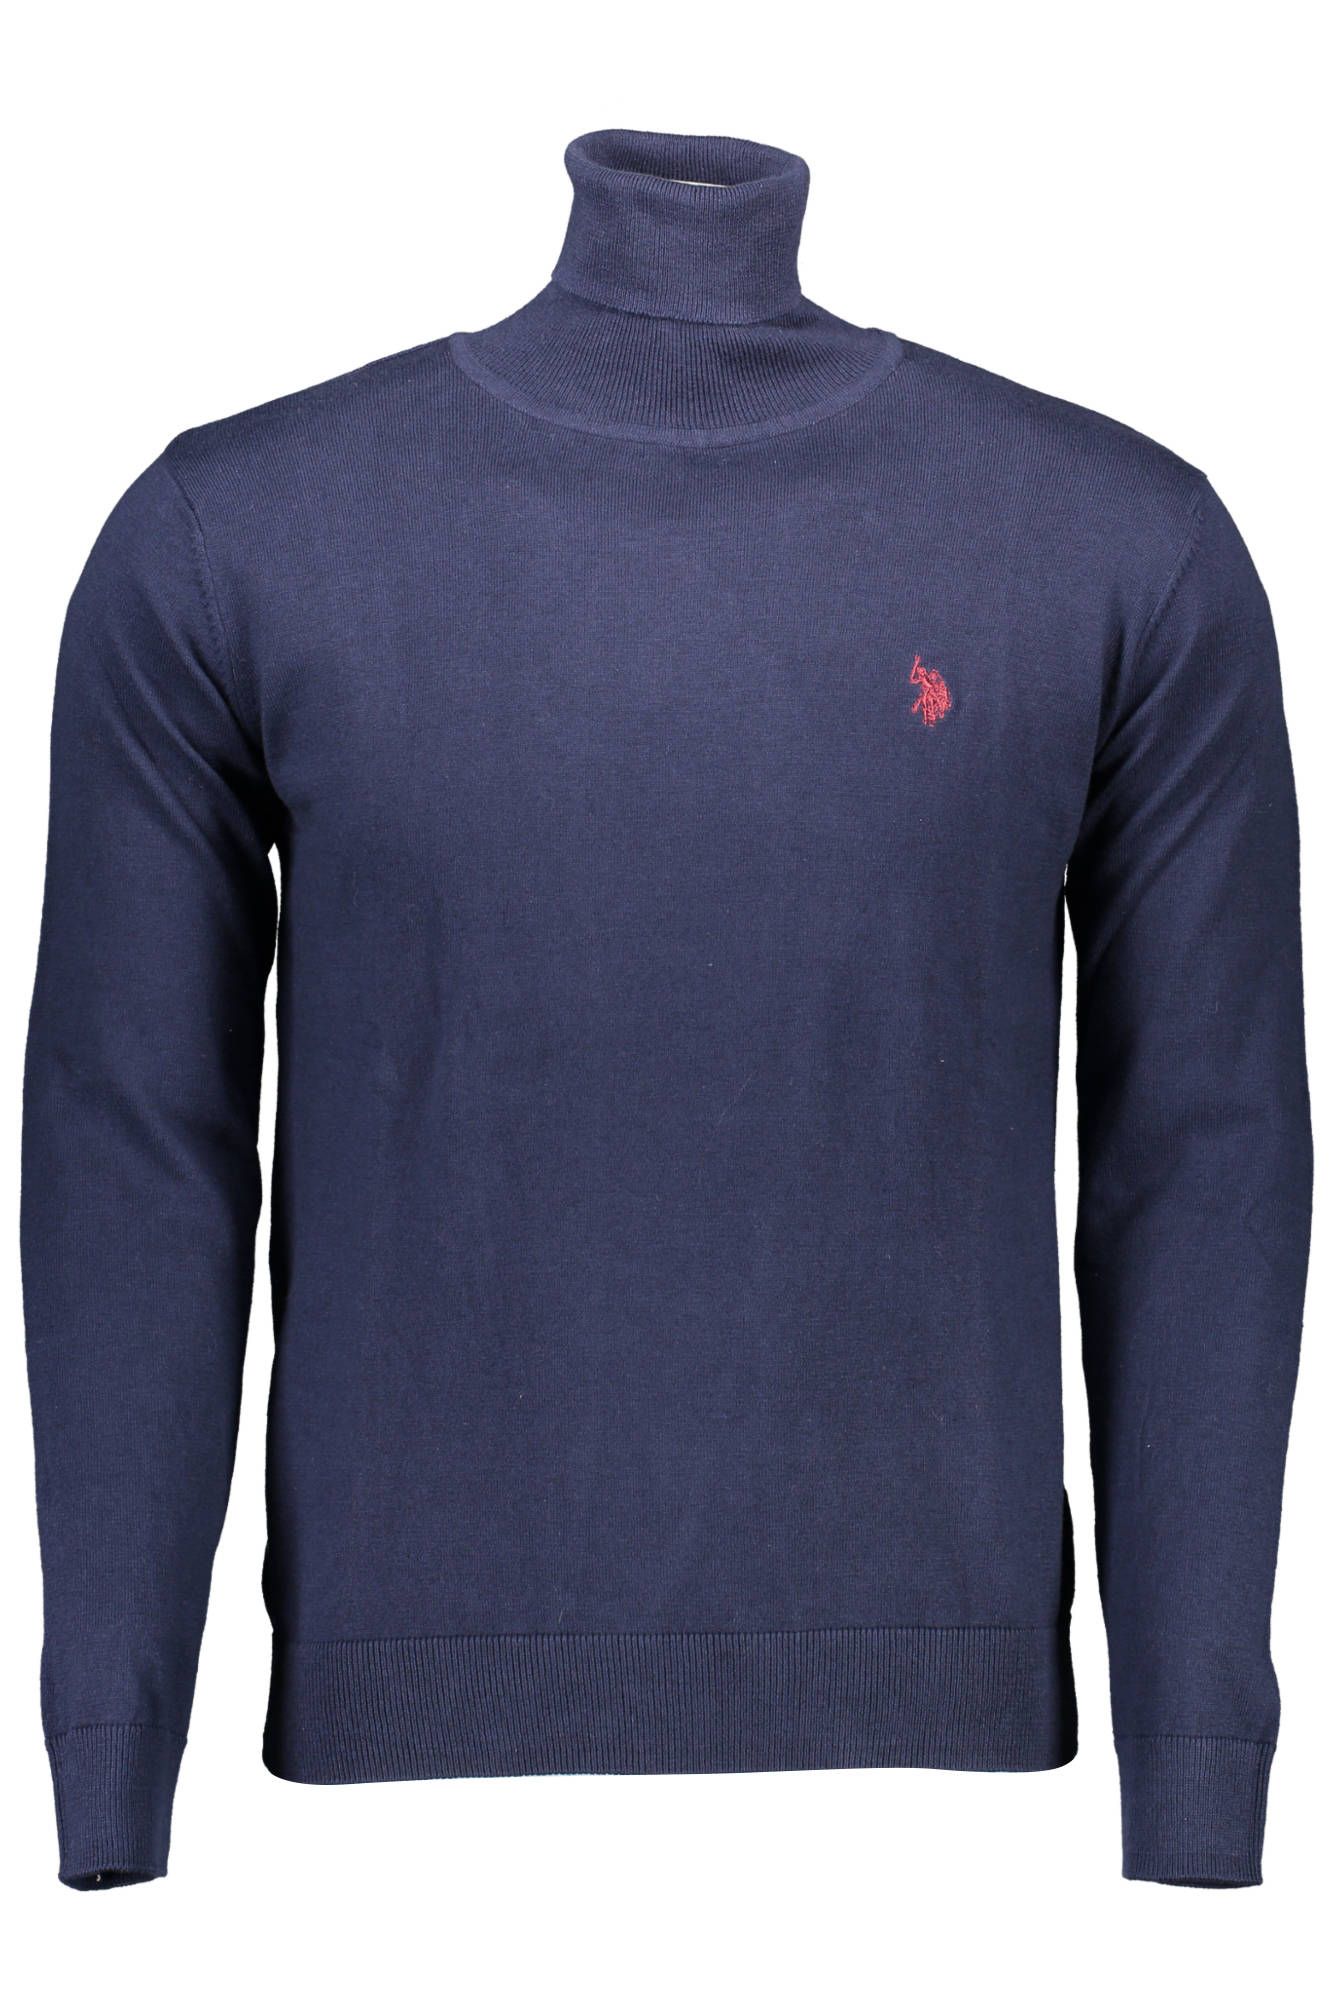 U.S. Polo Assn. Blue Cotton Sweater